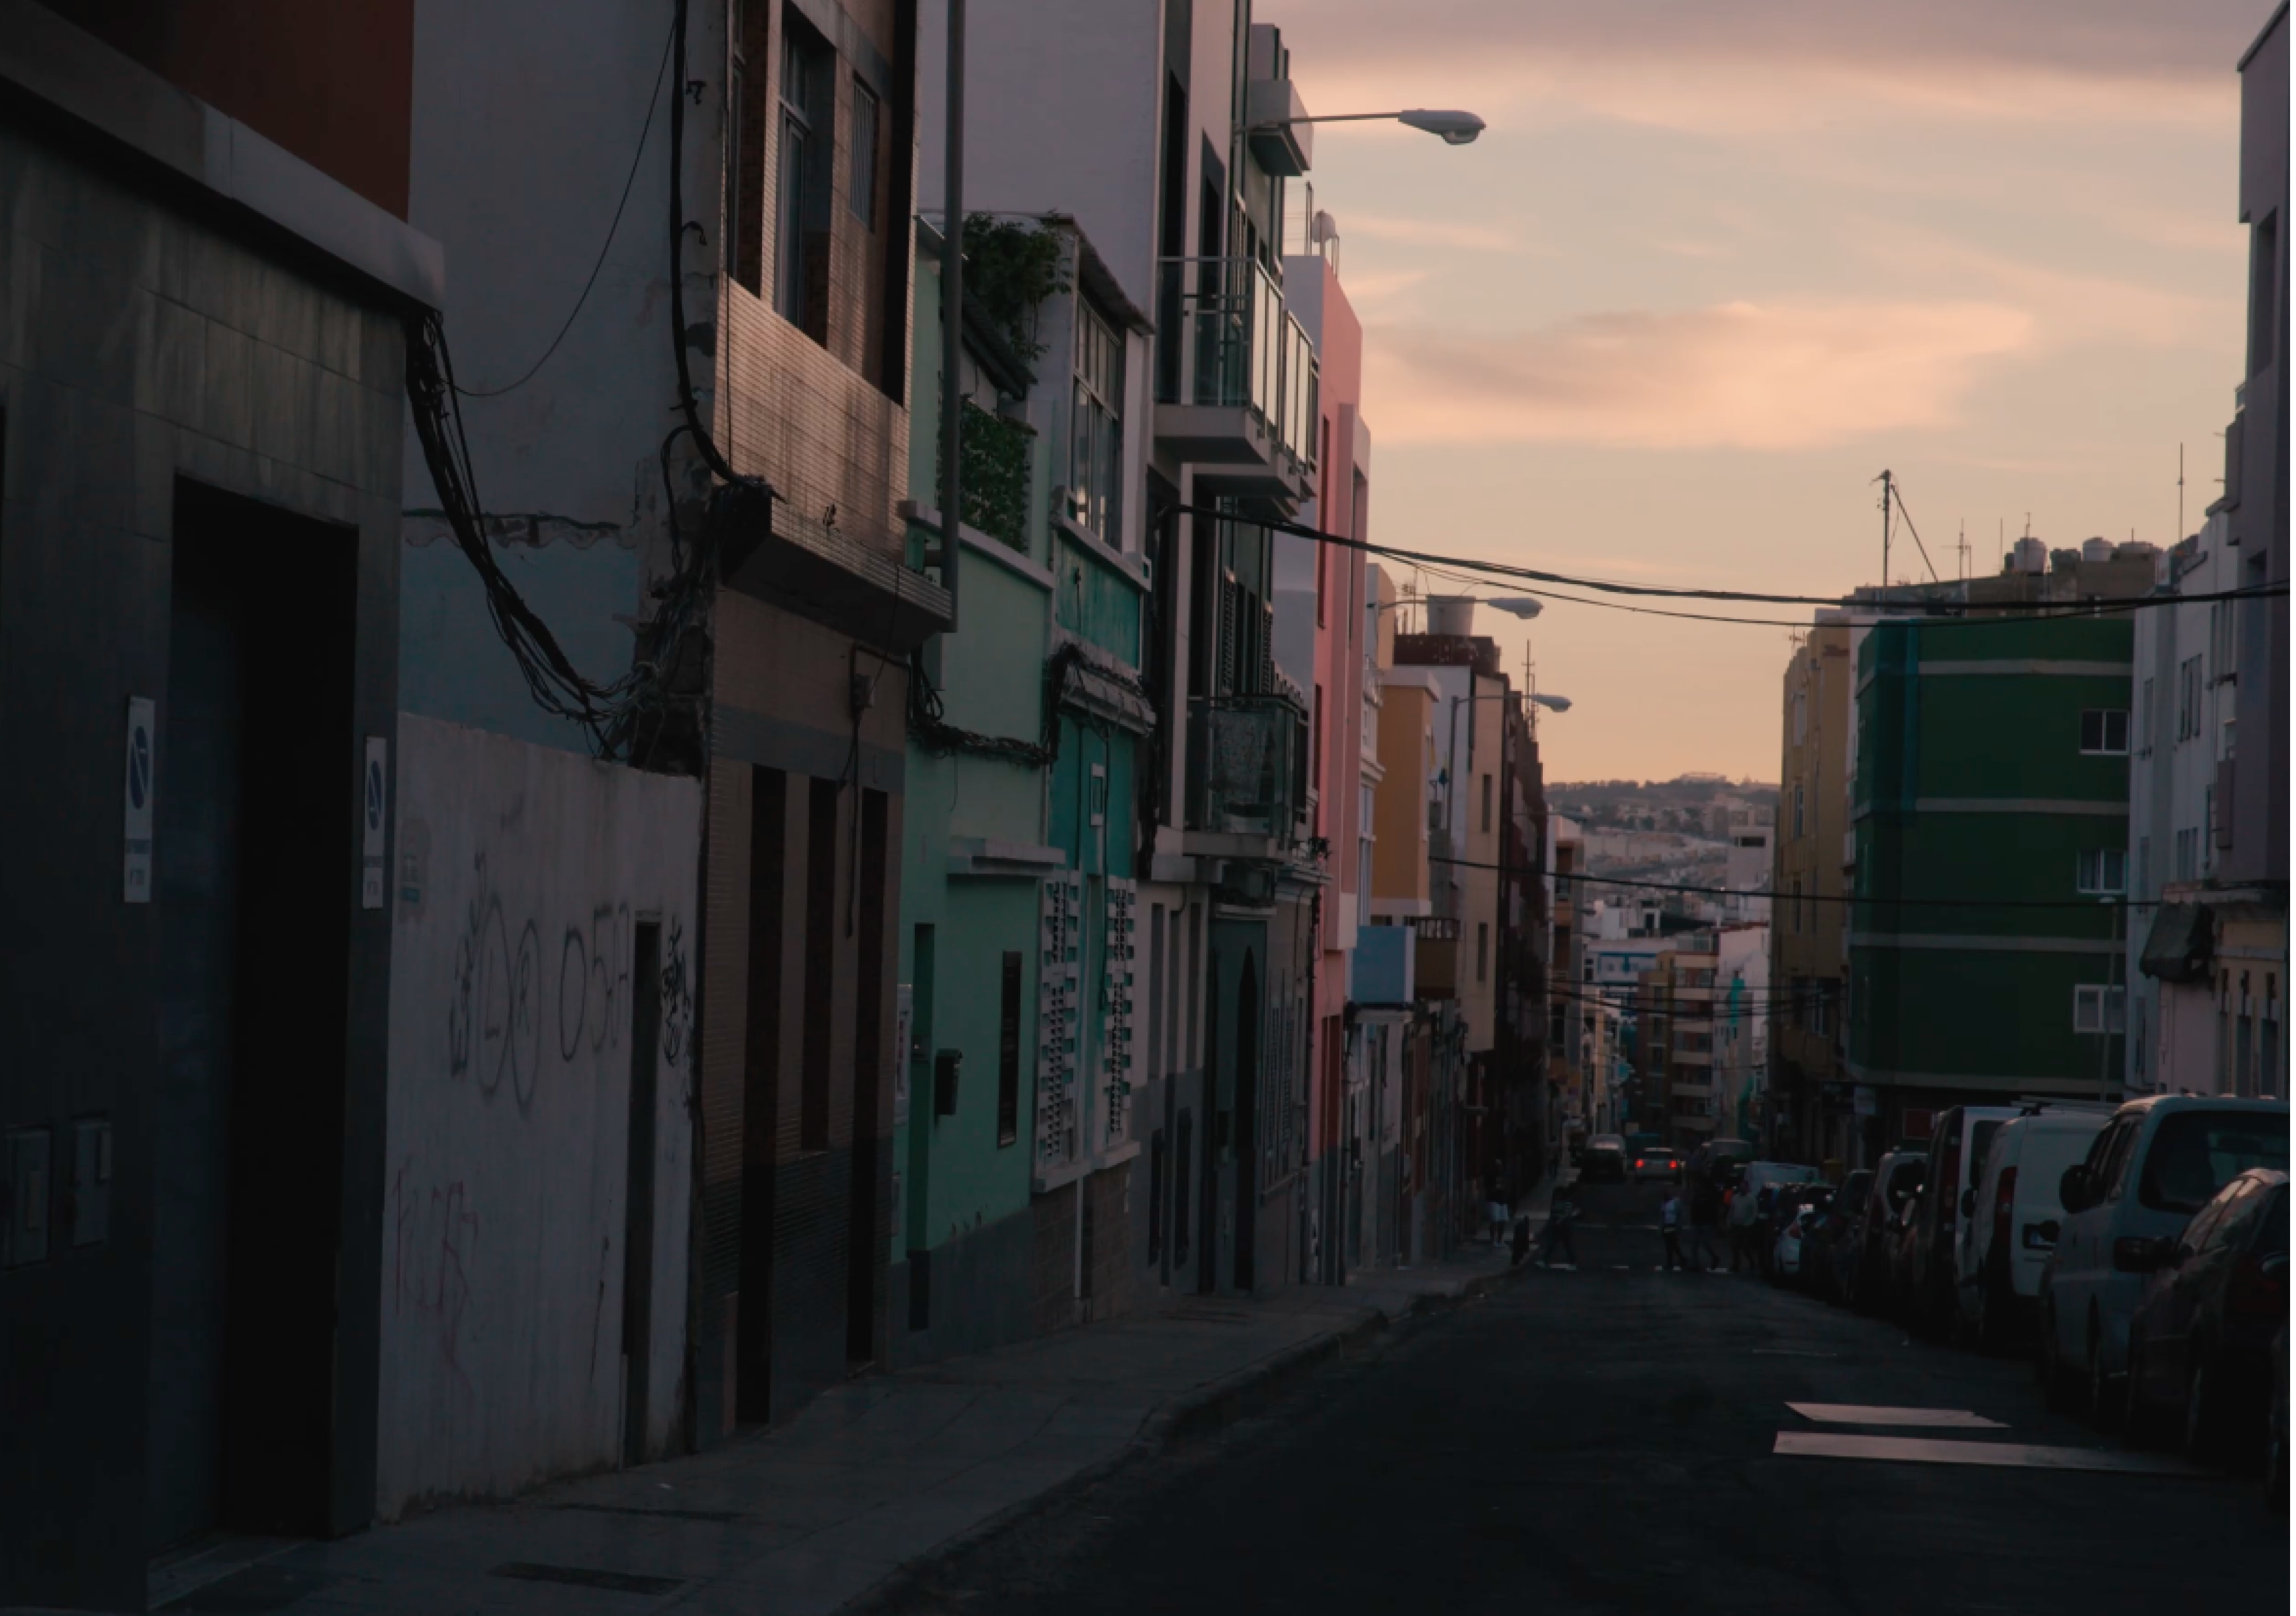 Streets of Las Palmas at sunset